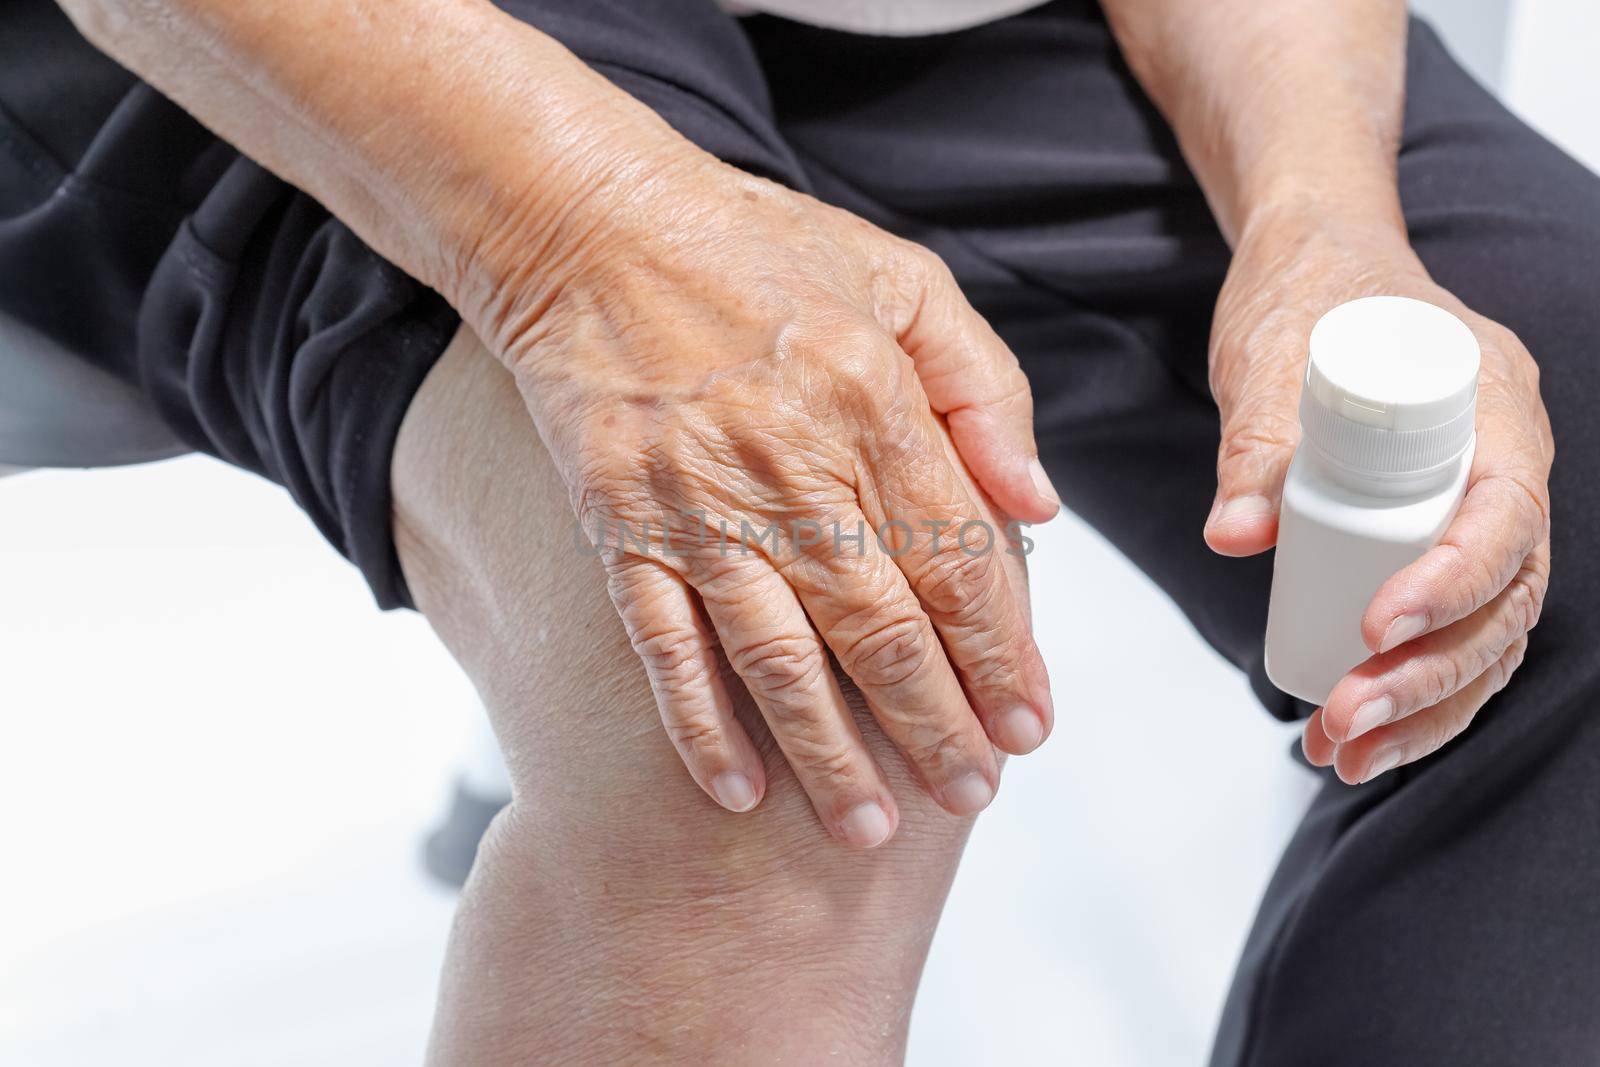 Knee Pain, Functional Impairment in Elderly by toa55